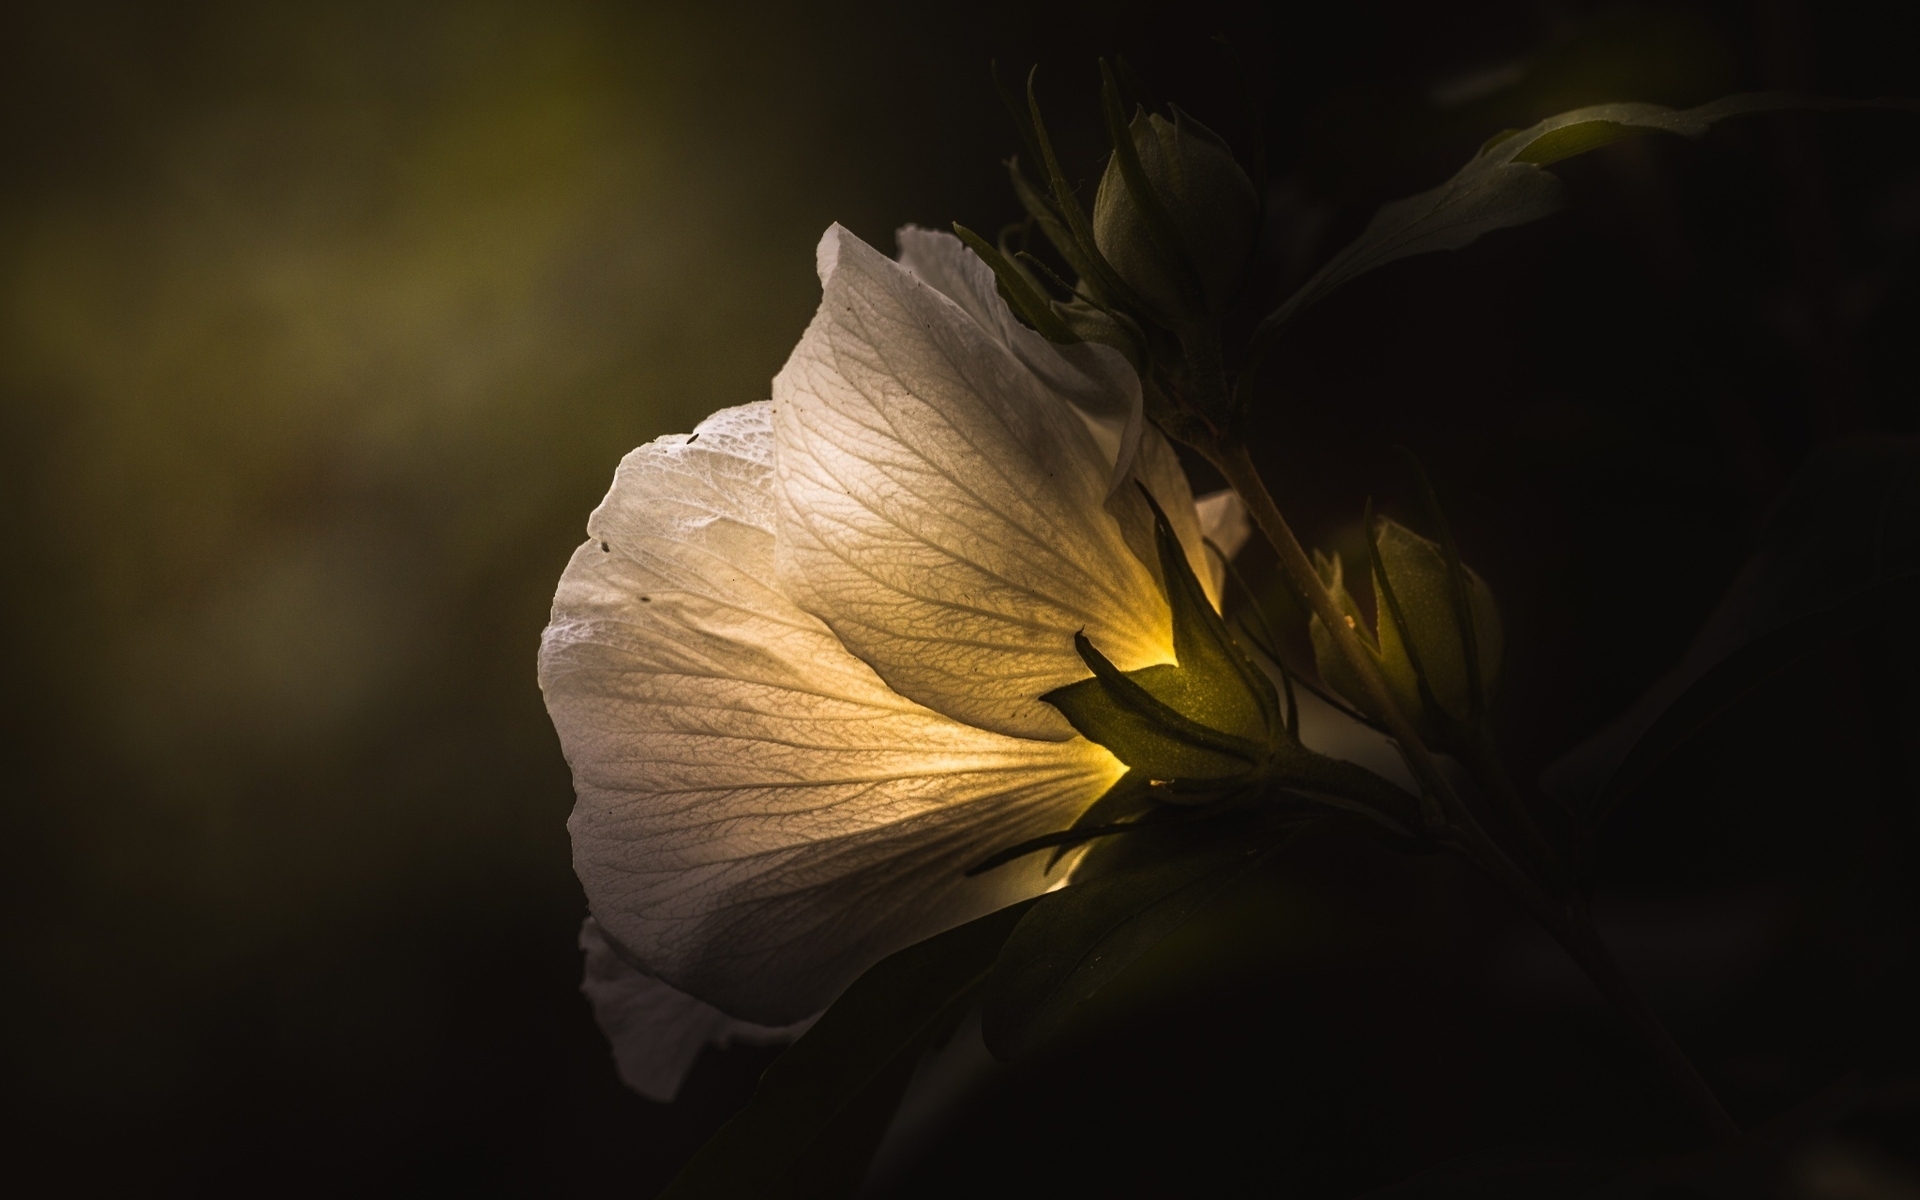 Image: Flower, petals, white, background, light